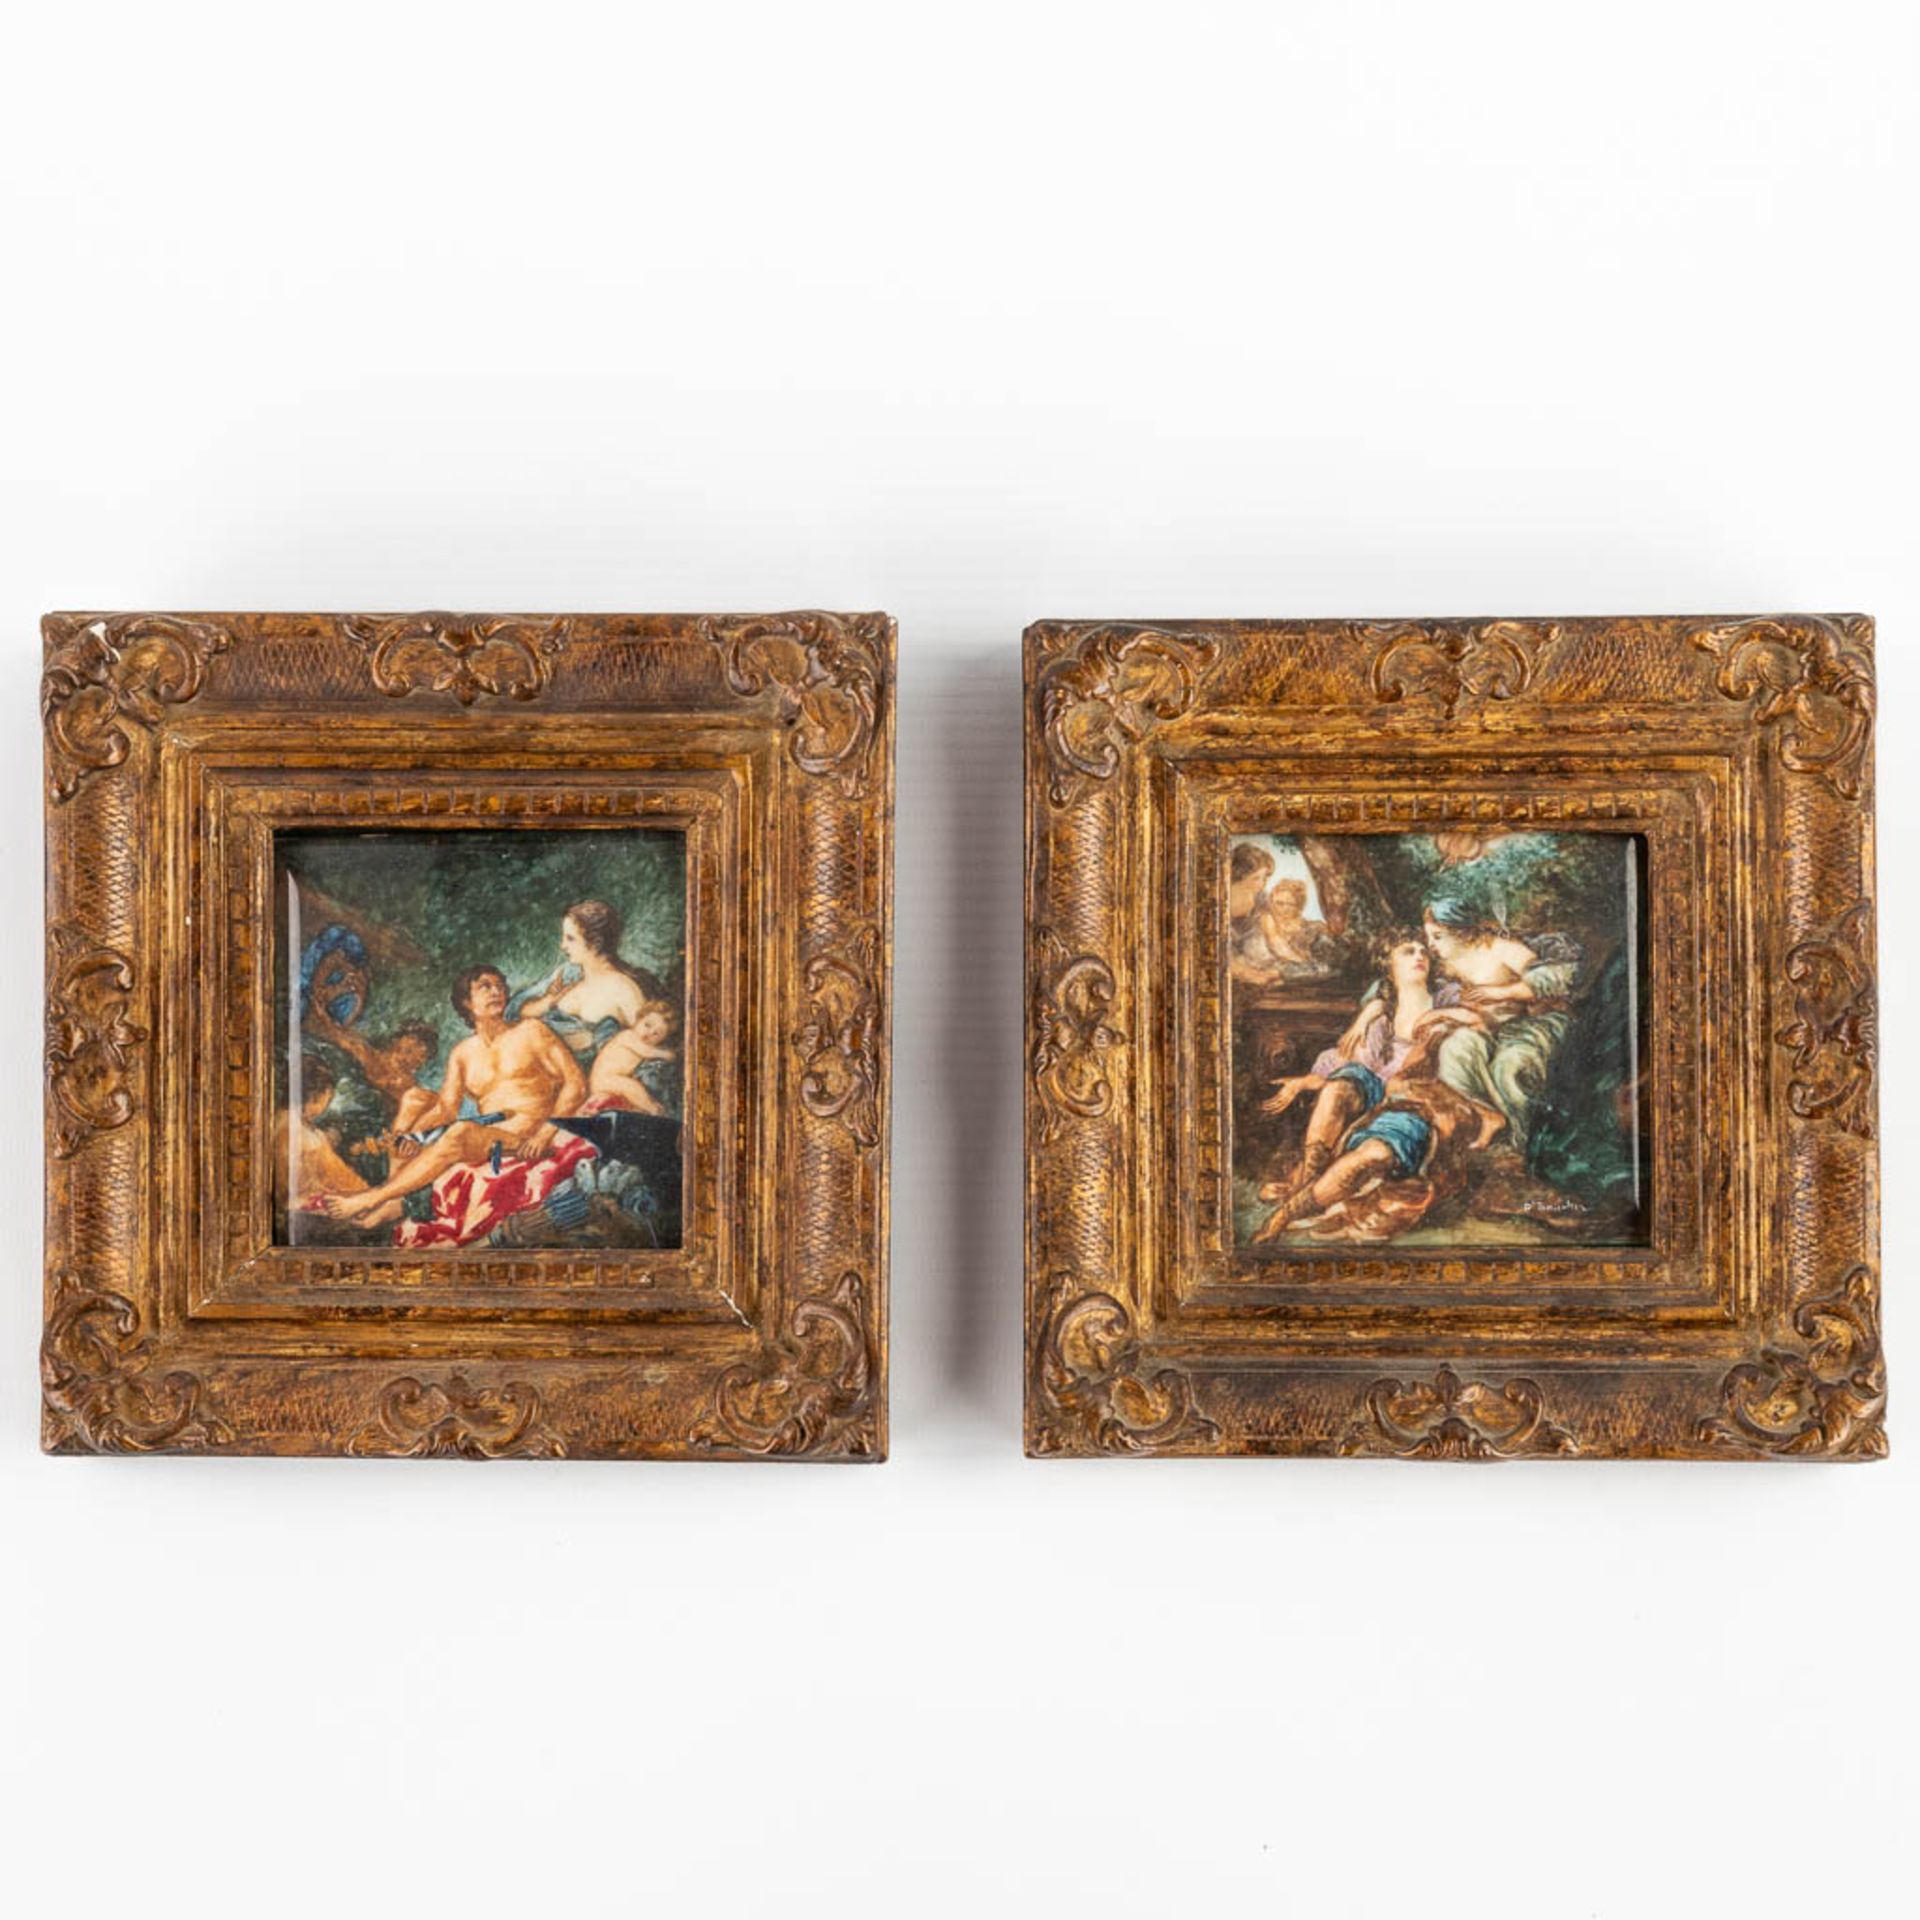 Two miniature paintings, oil on bone. After François Boucher. 19th C. (W:9 x H:9 cm)